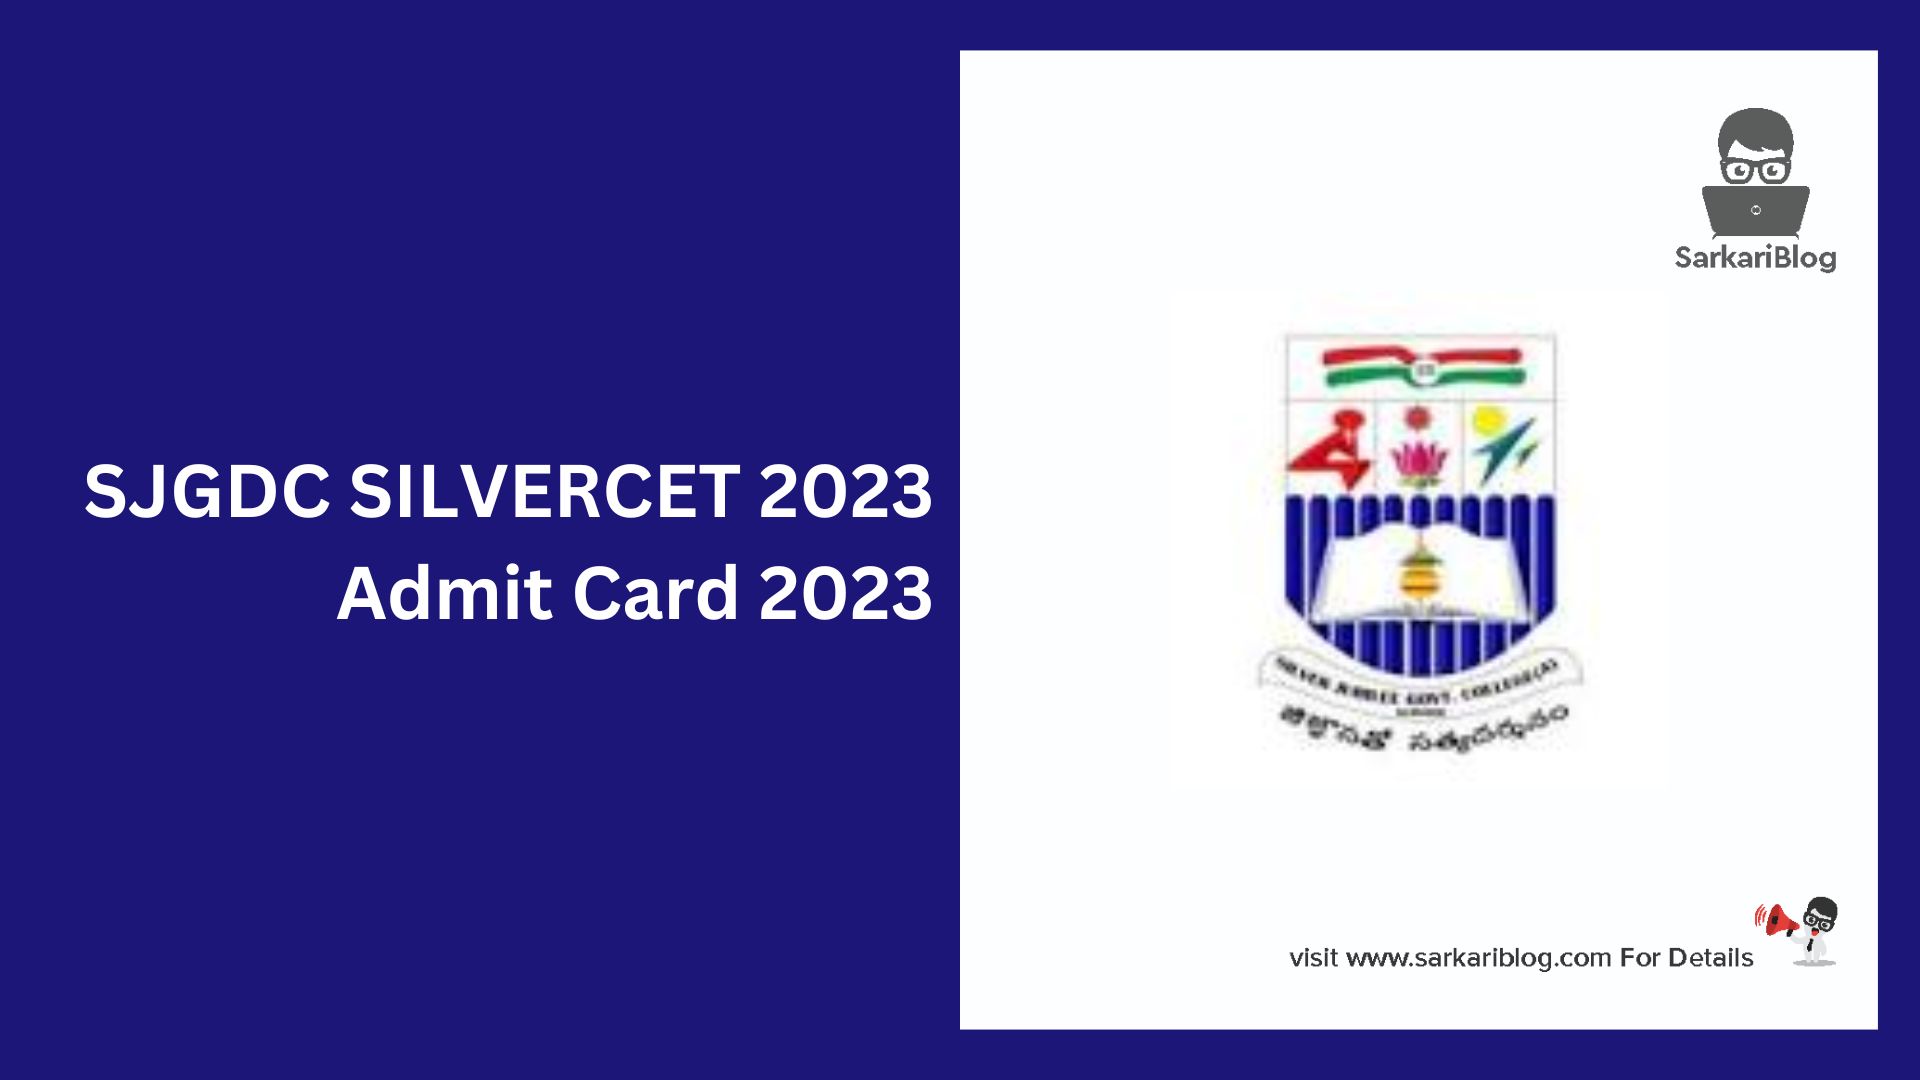 SJGDC SILVERCET 2023 Admit Card 2023